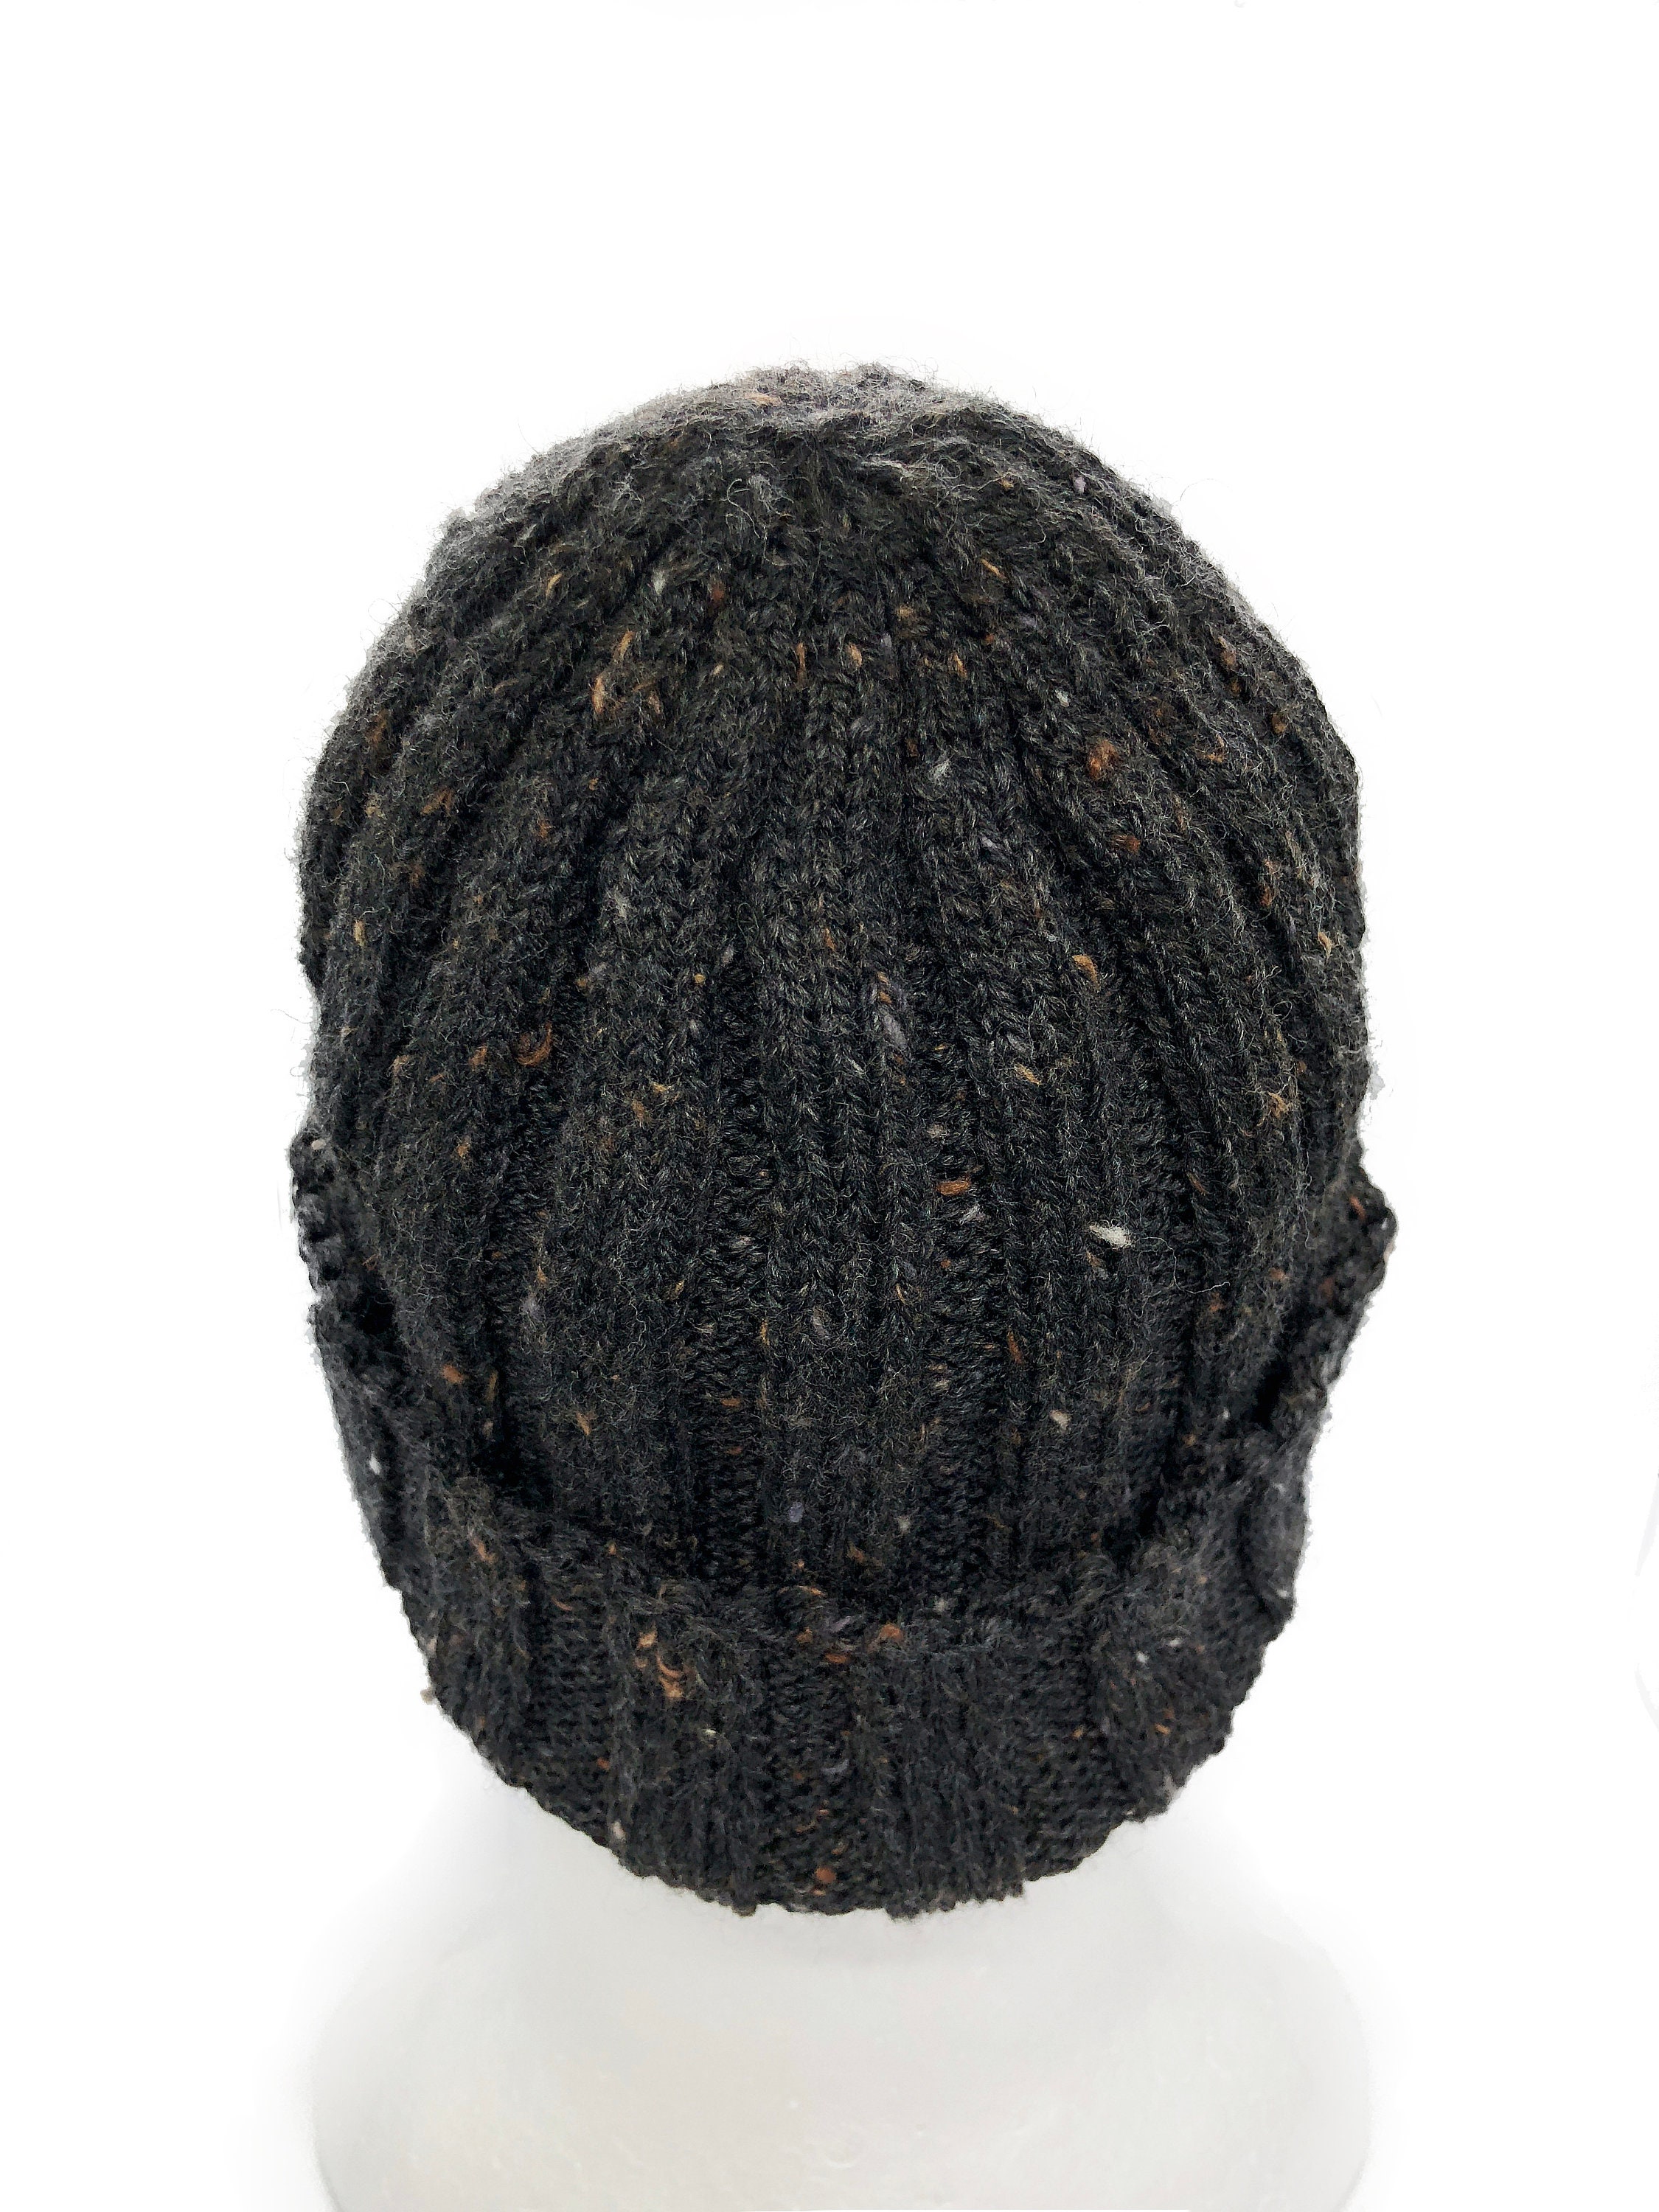 Black mens beanie wool knit hat | Etsy